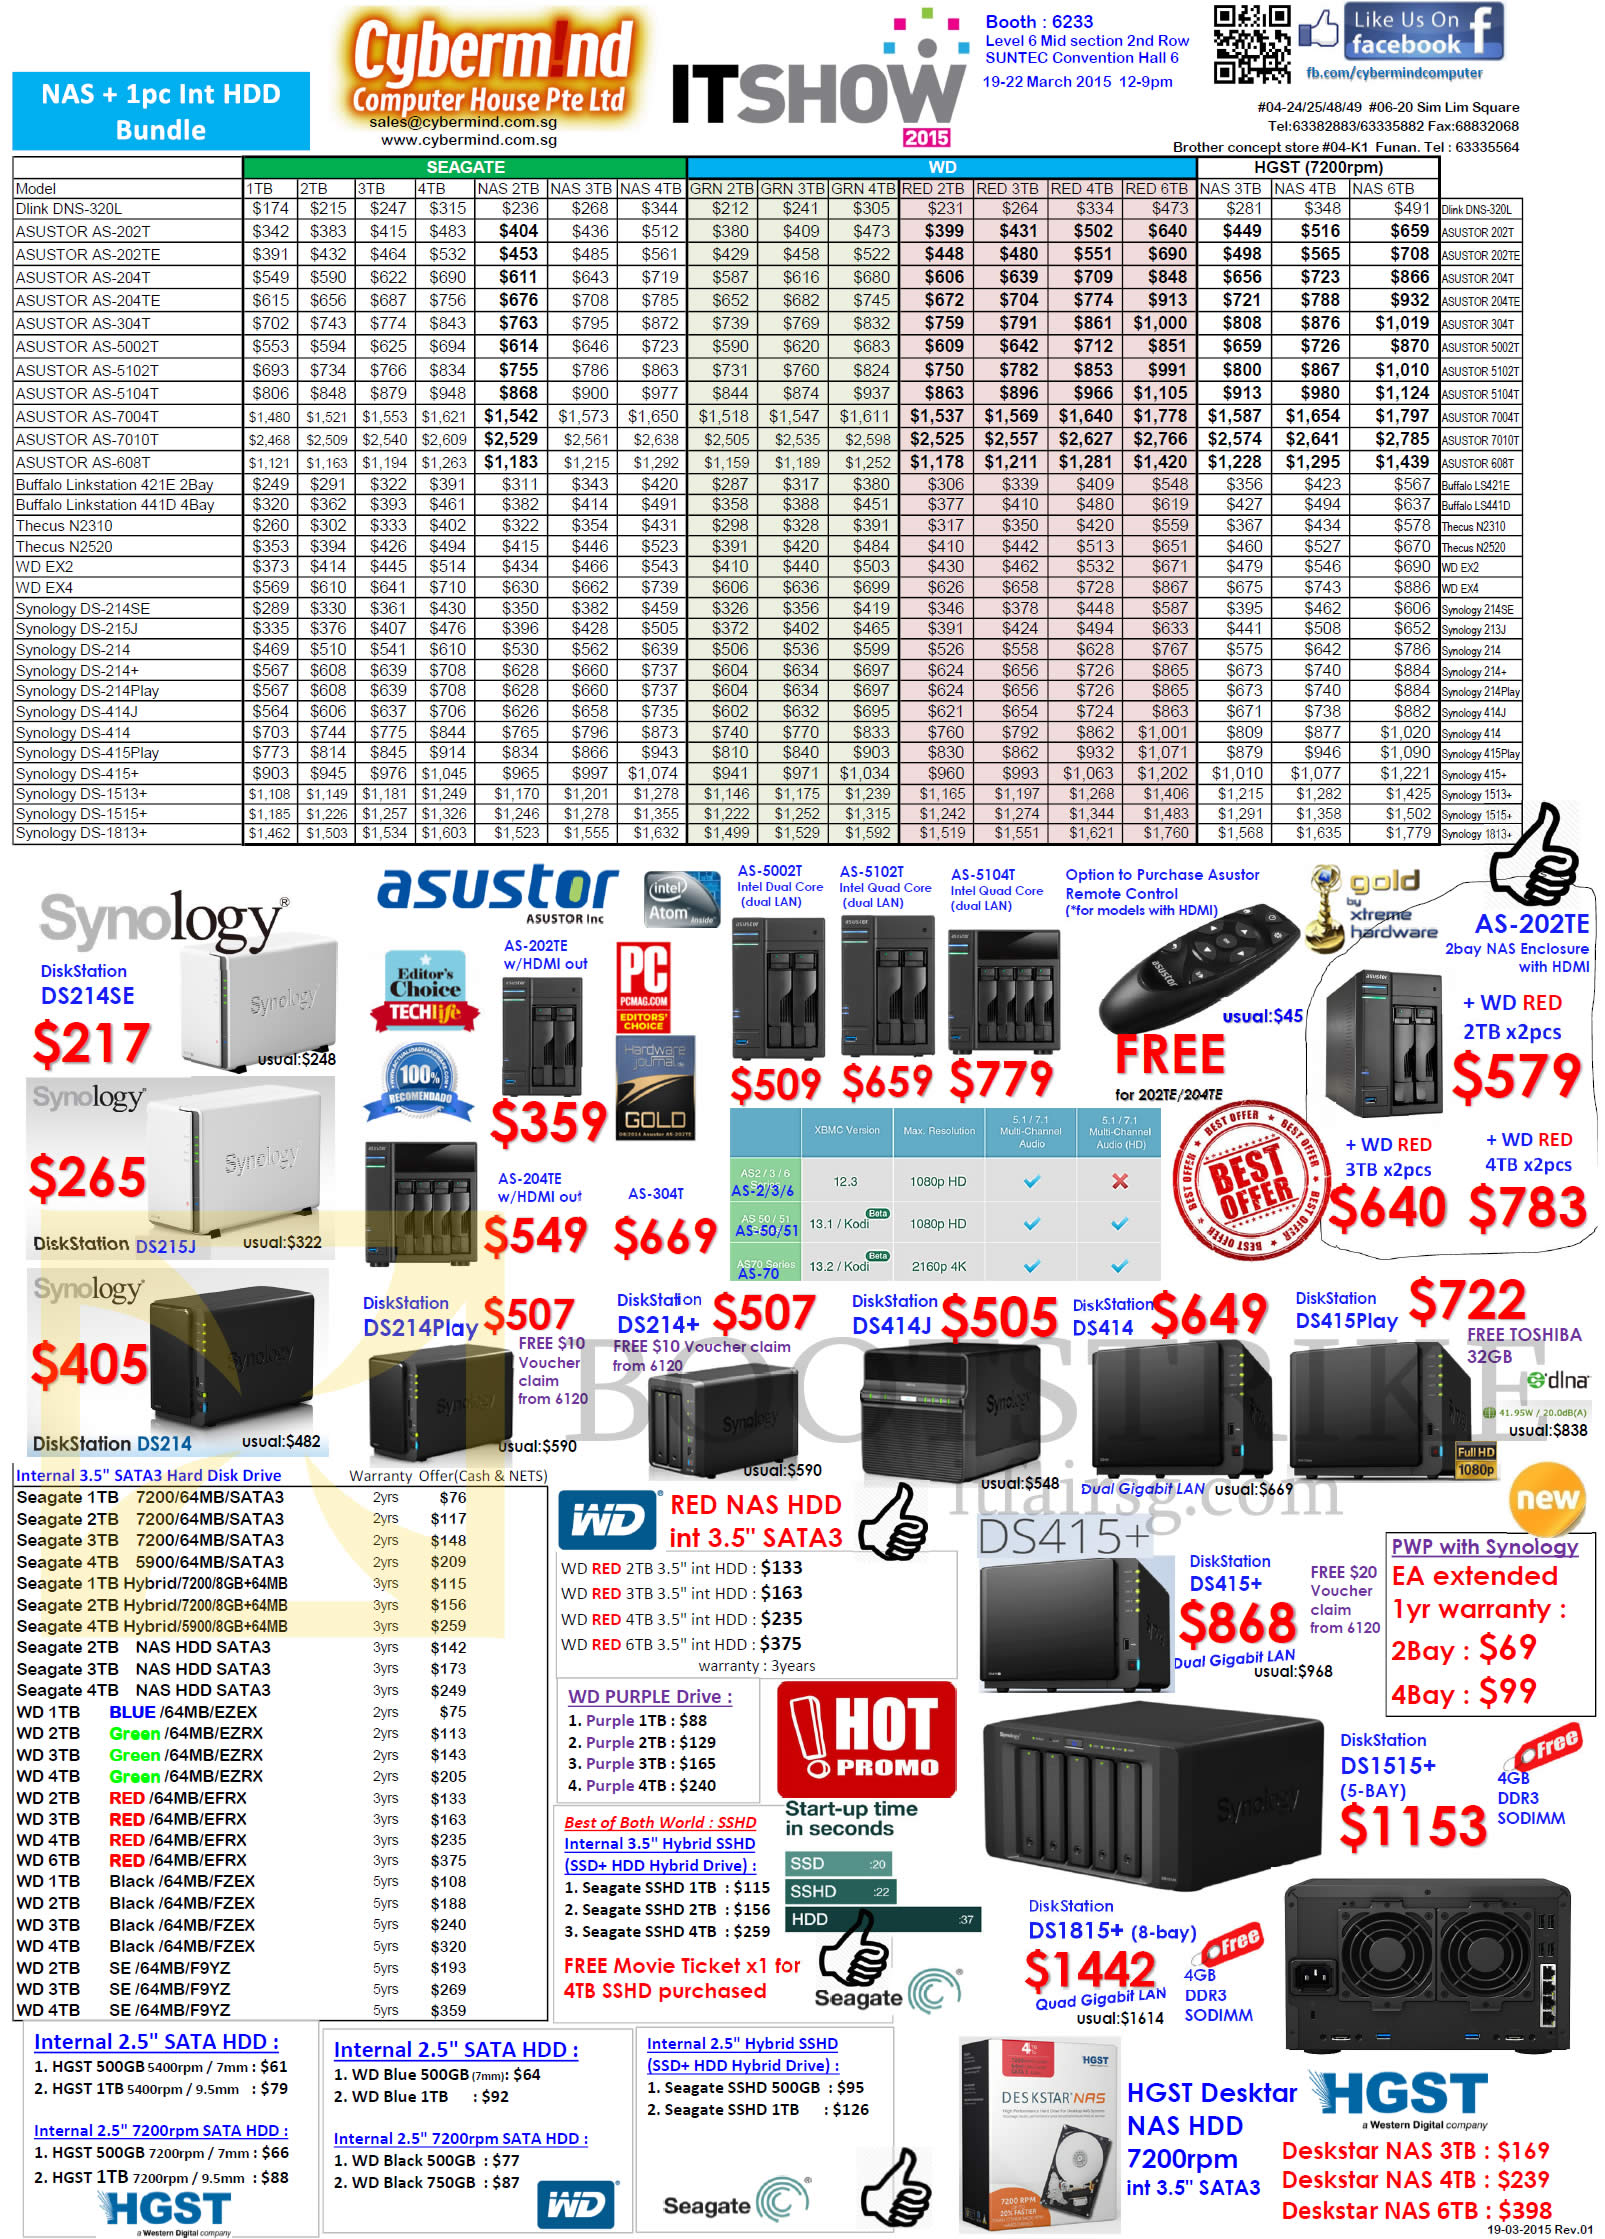 IT SHOW 2015 price list image brochure of Cybermind NAS, HDDs, Synology DiskStation, Asustor, WD, DiskStation, HGST, D-Link, WD, Seagate